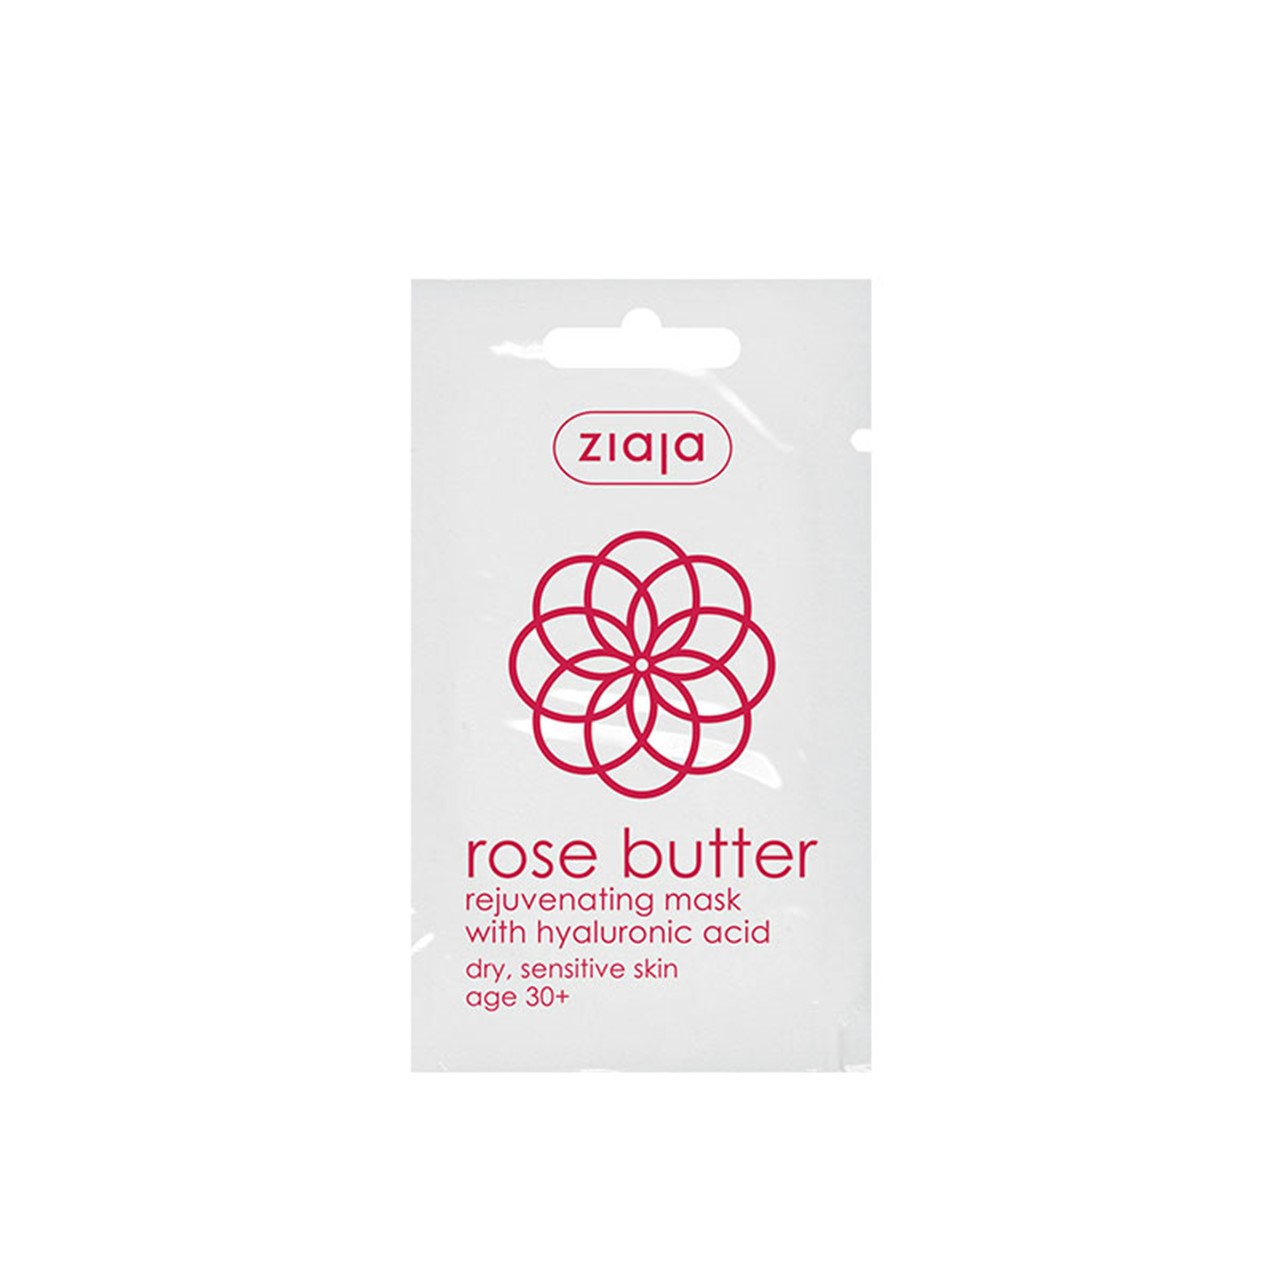 Ziaja Rose Butter Rejuvenating Face Mask 7ml (0.24 fl oz)